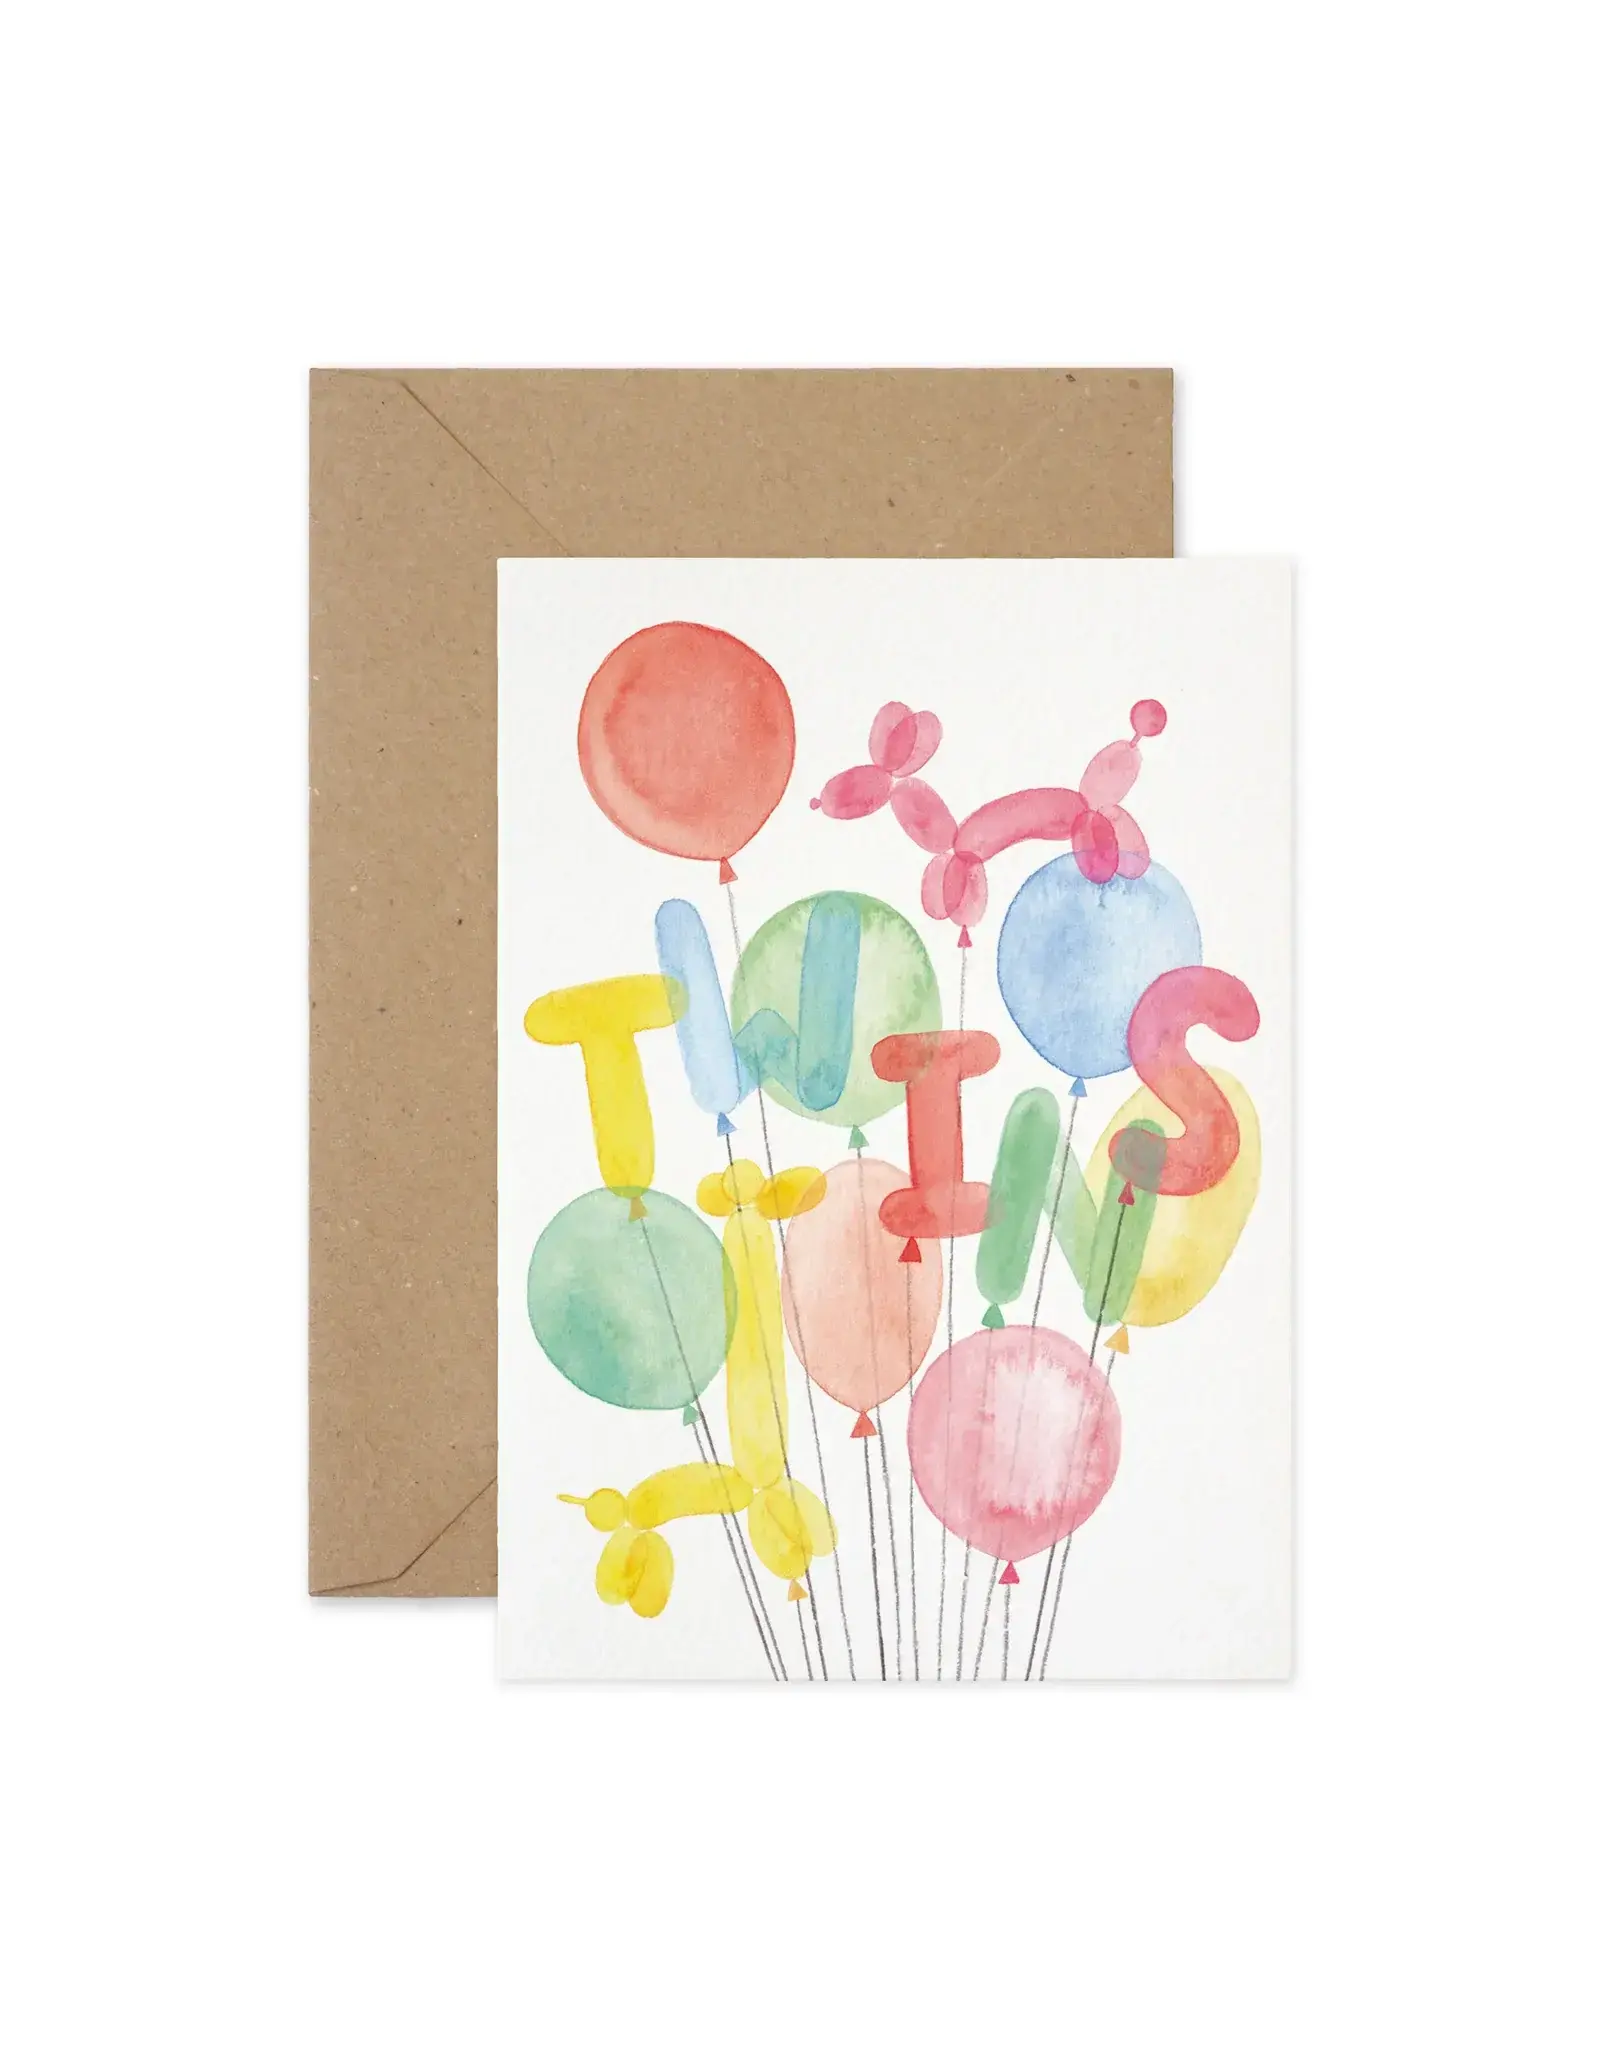 Paper Parade Stationers Wenskaart - Twins Balloons - Dubbele kaart + Envelop